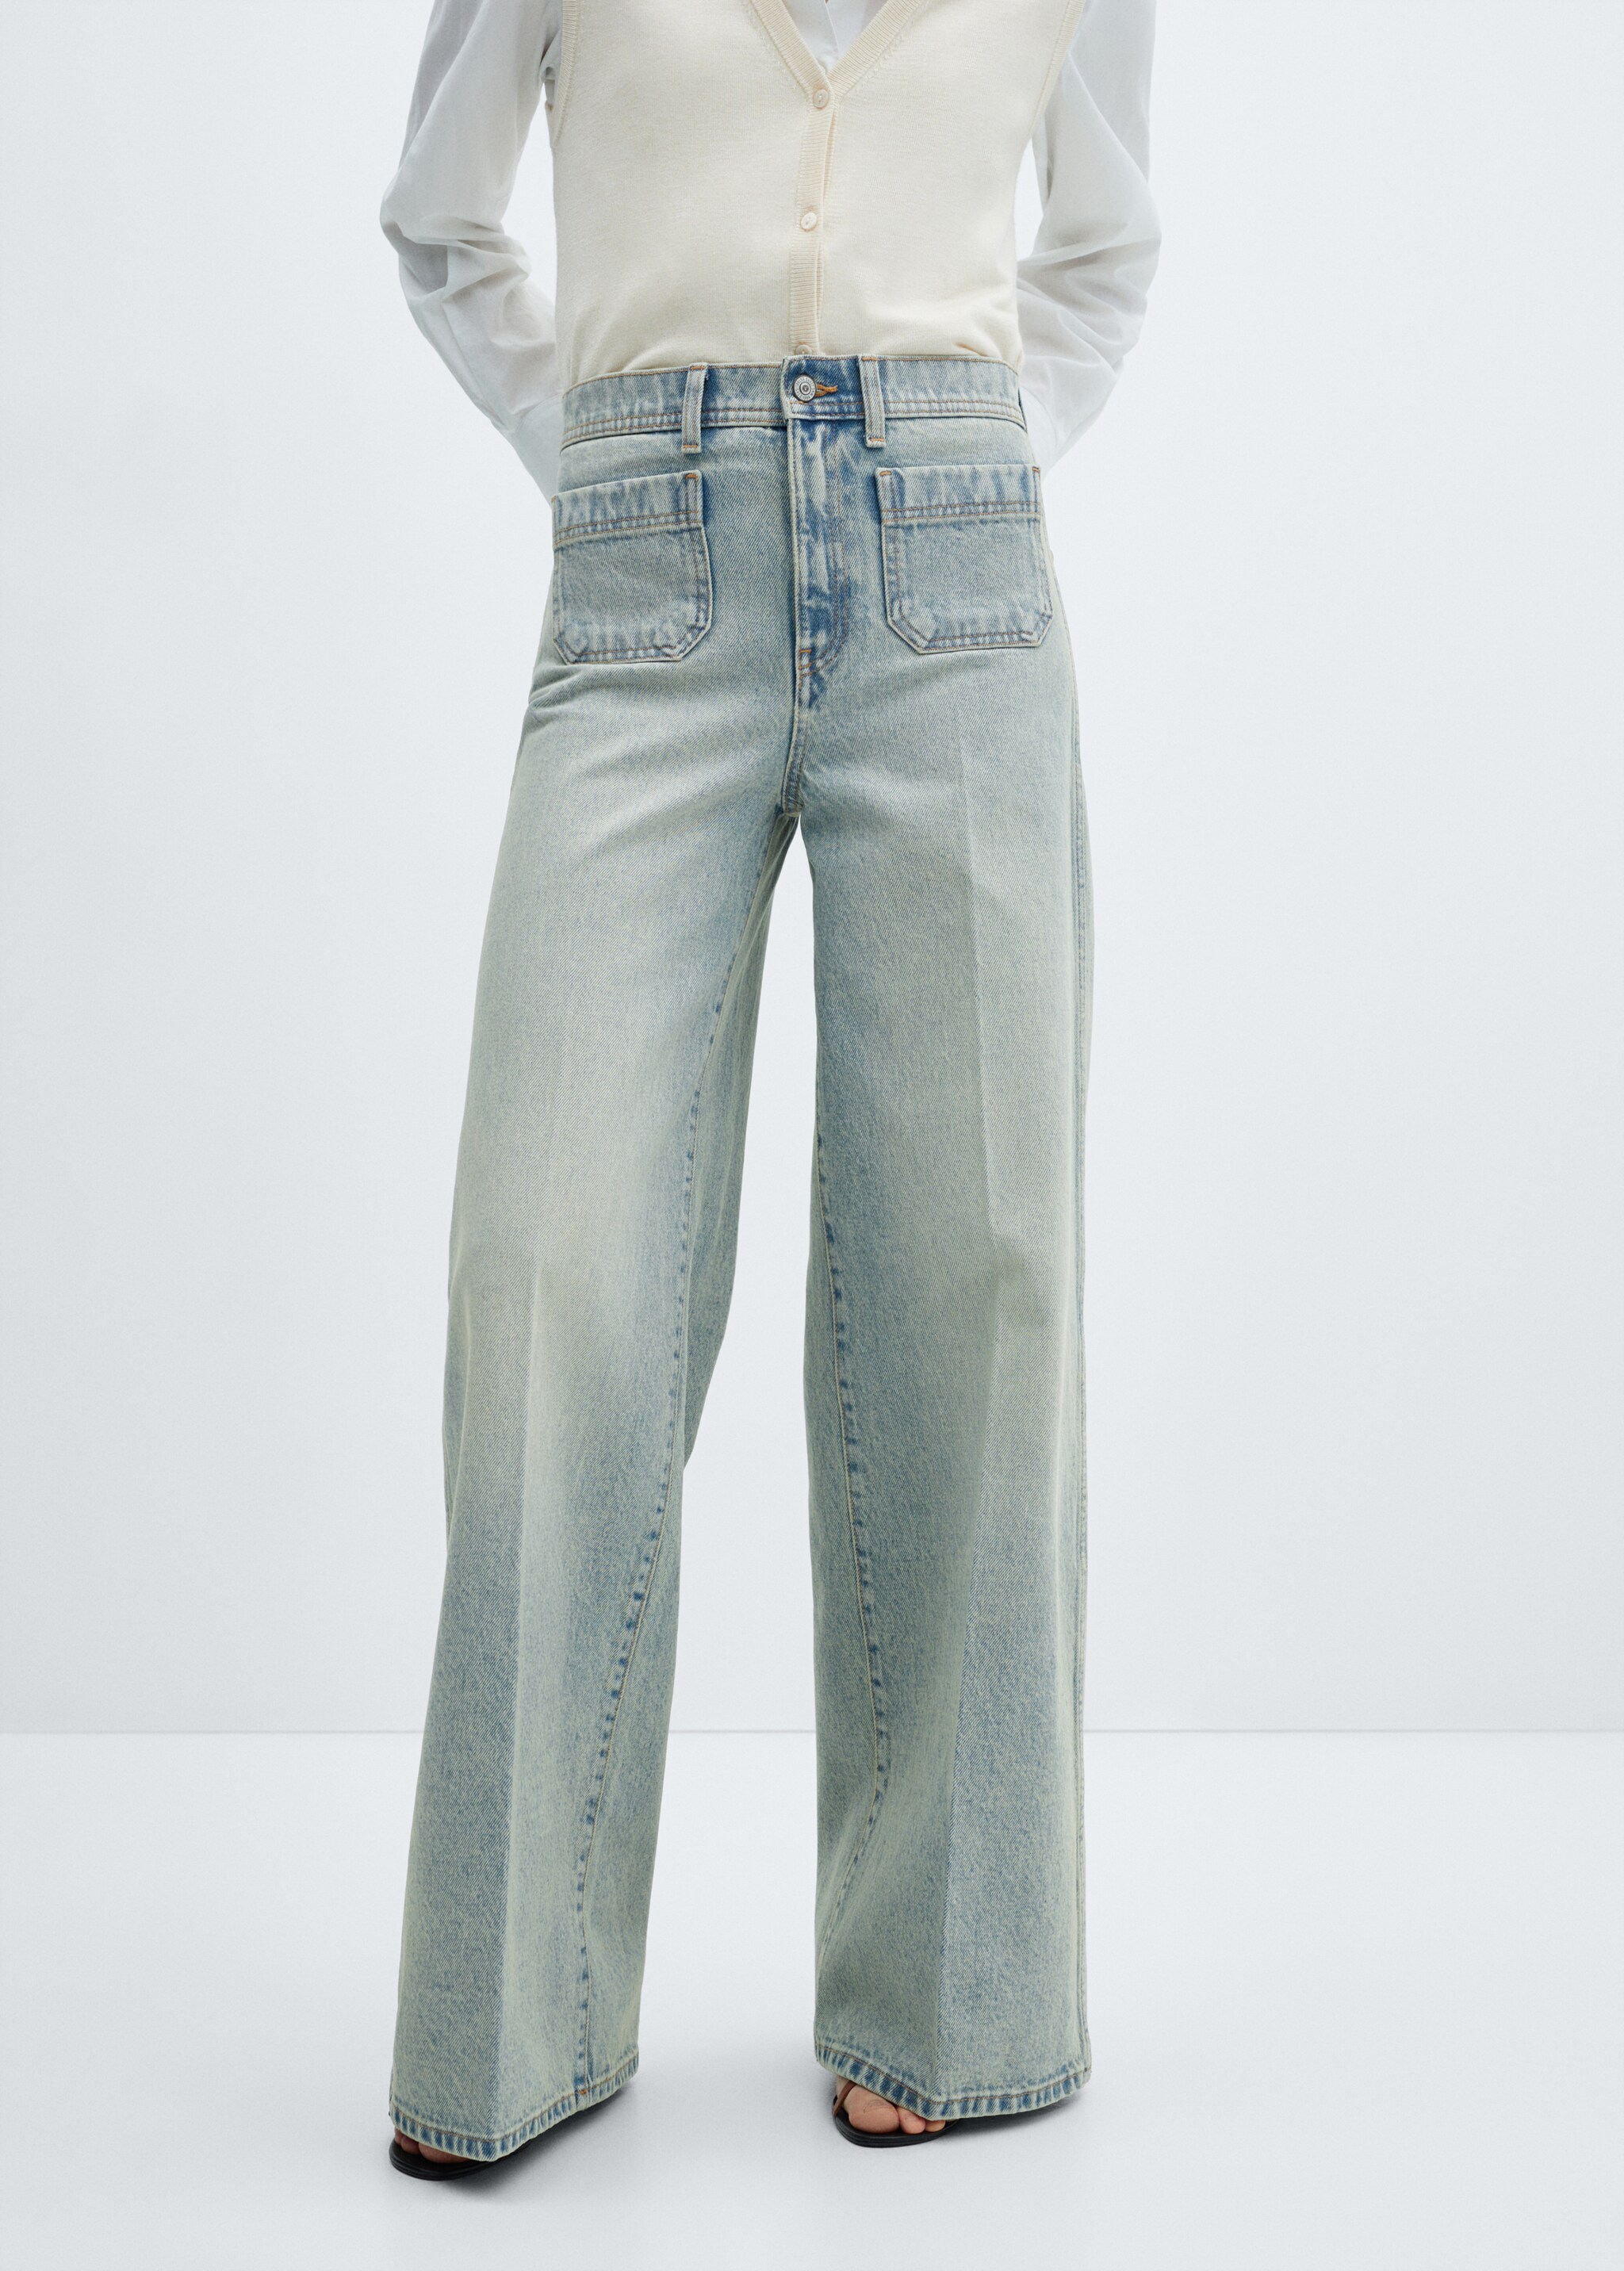 Wideleg jeans with pockets - Medium plane